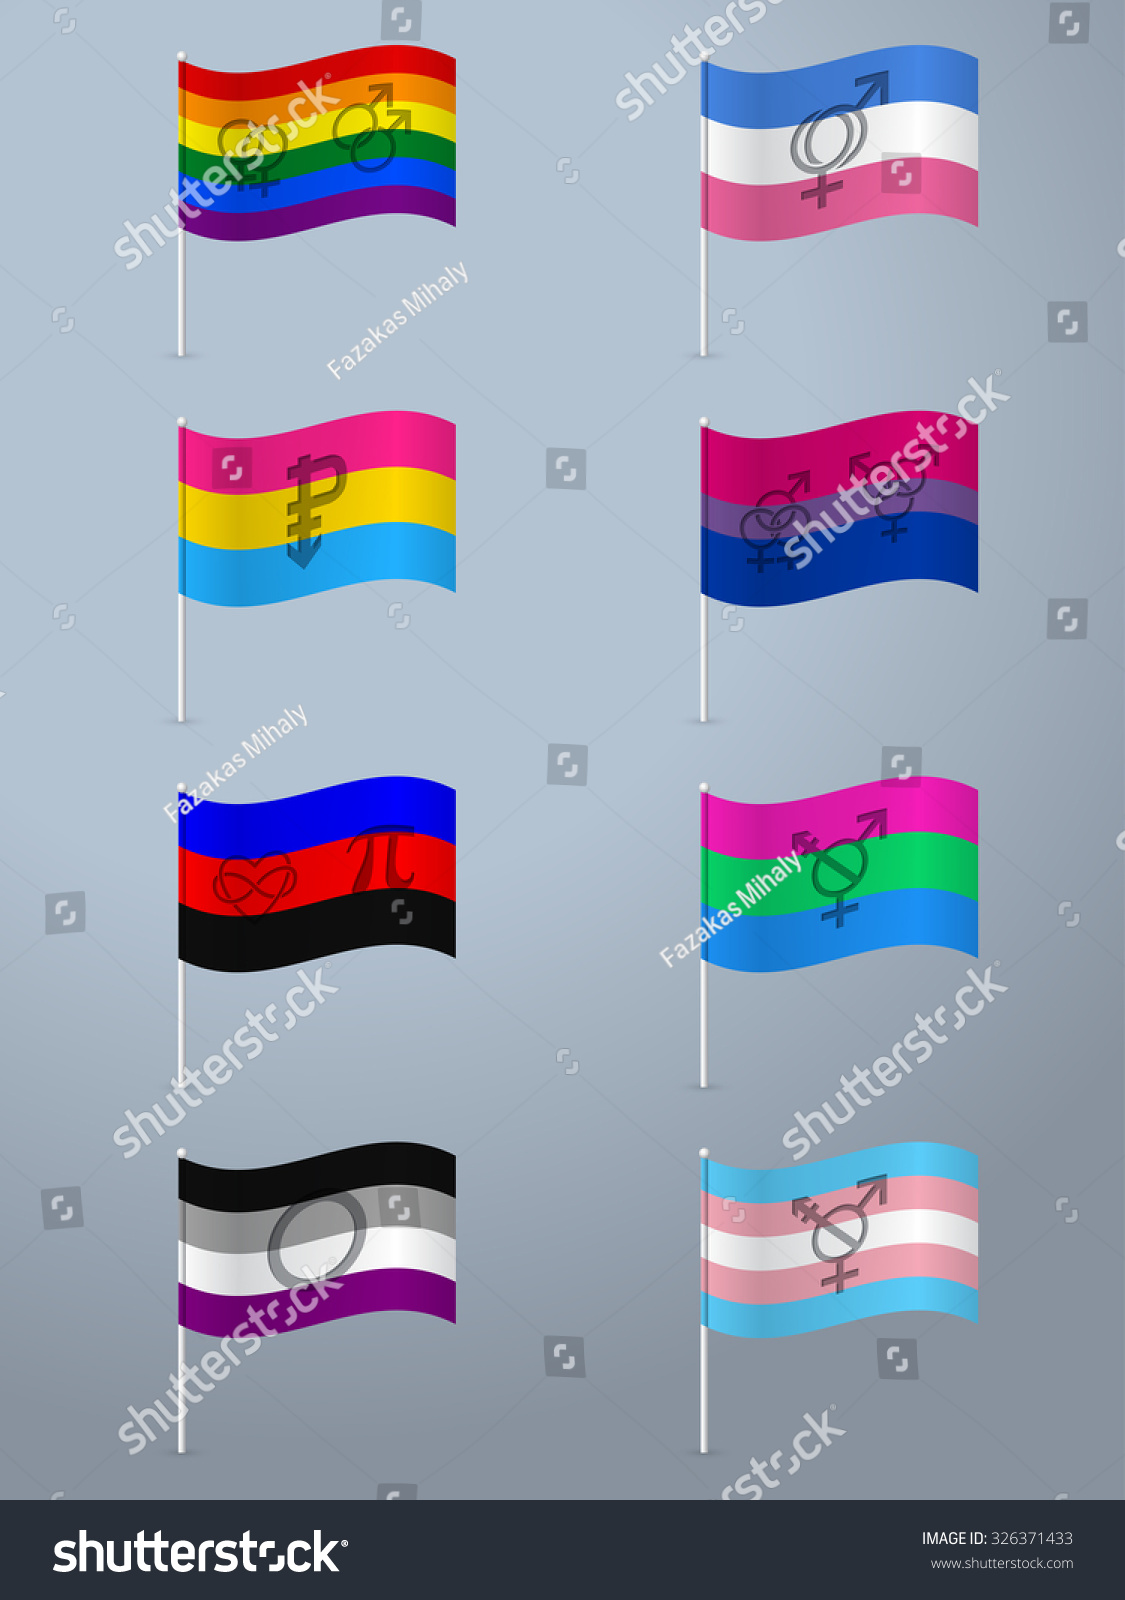 Sexual Orientation Waving Flag Set With Symbols Stock Vector Illustration 326371433 Shutterstock 